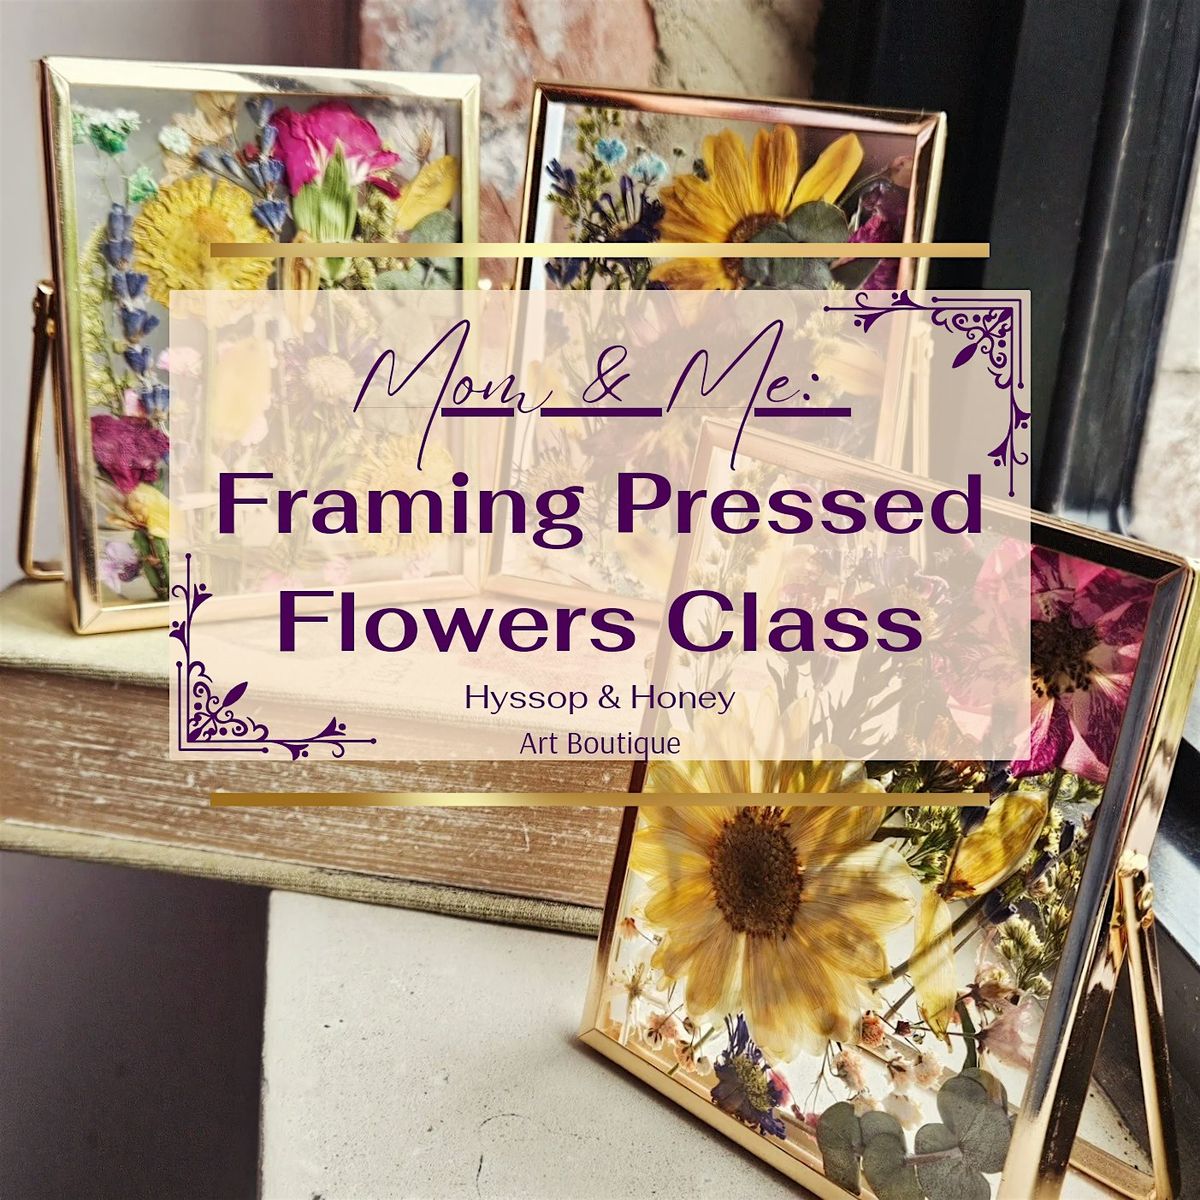 Mom & Me: Framing Pressed Flowers Class